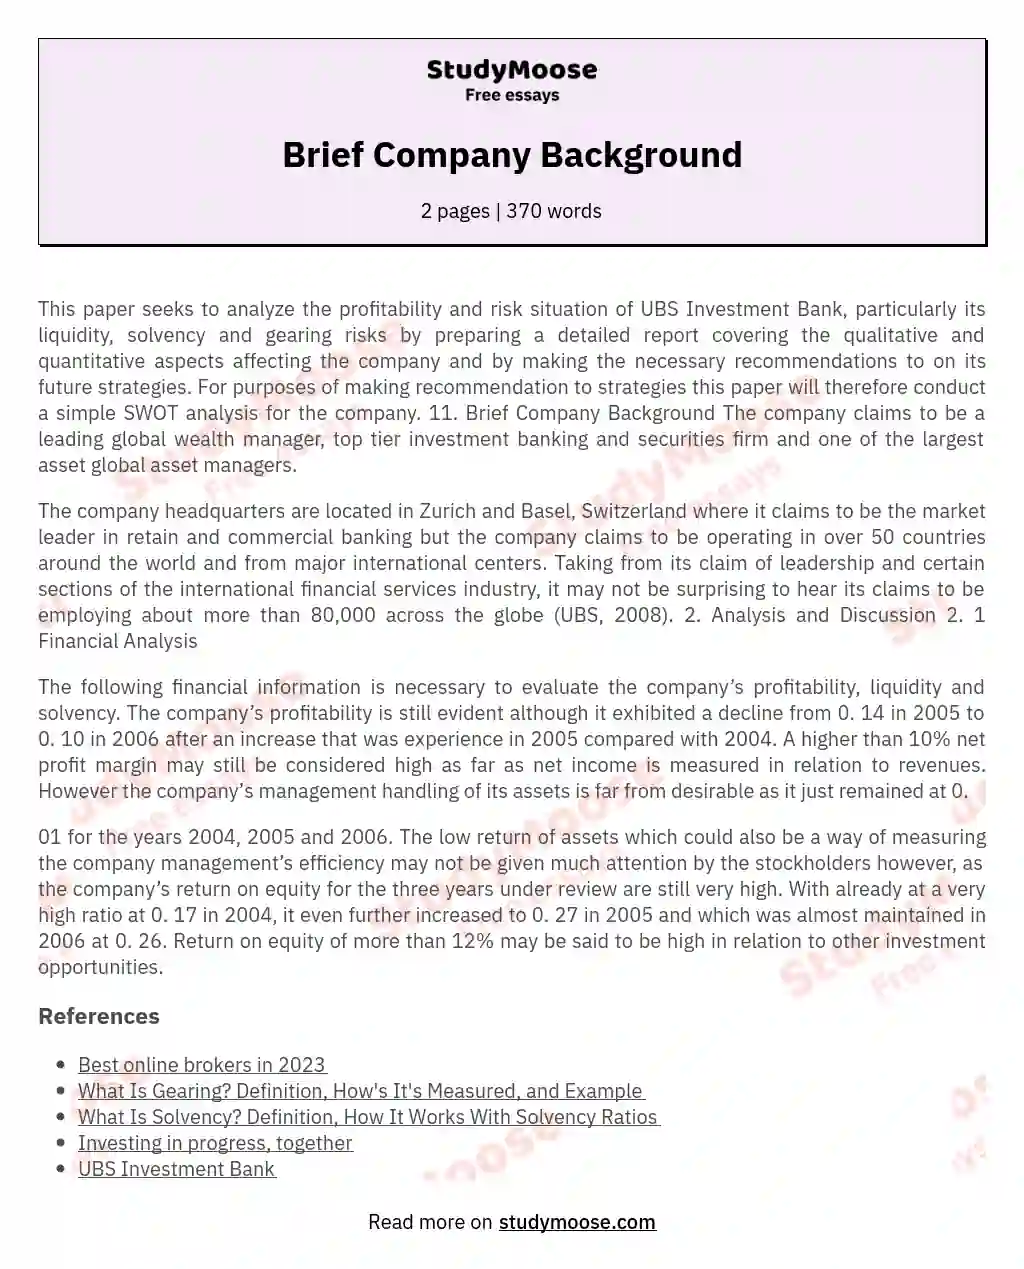 Brief Company Background essay